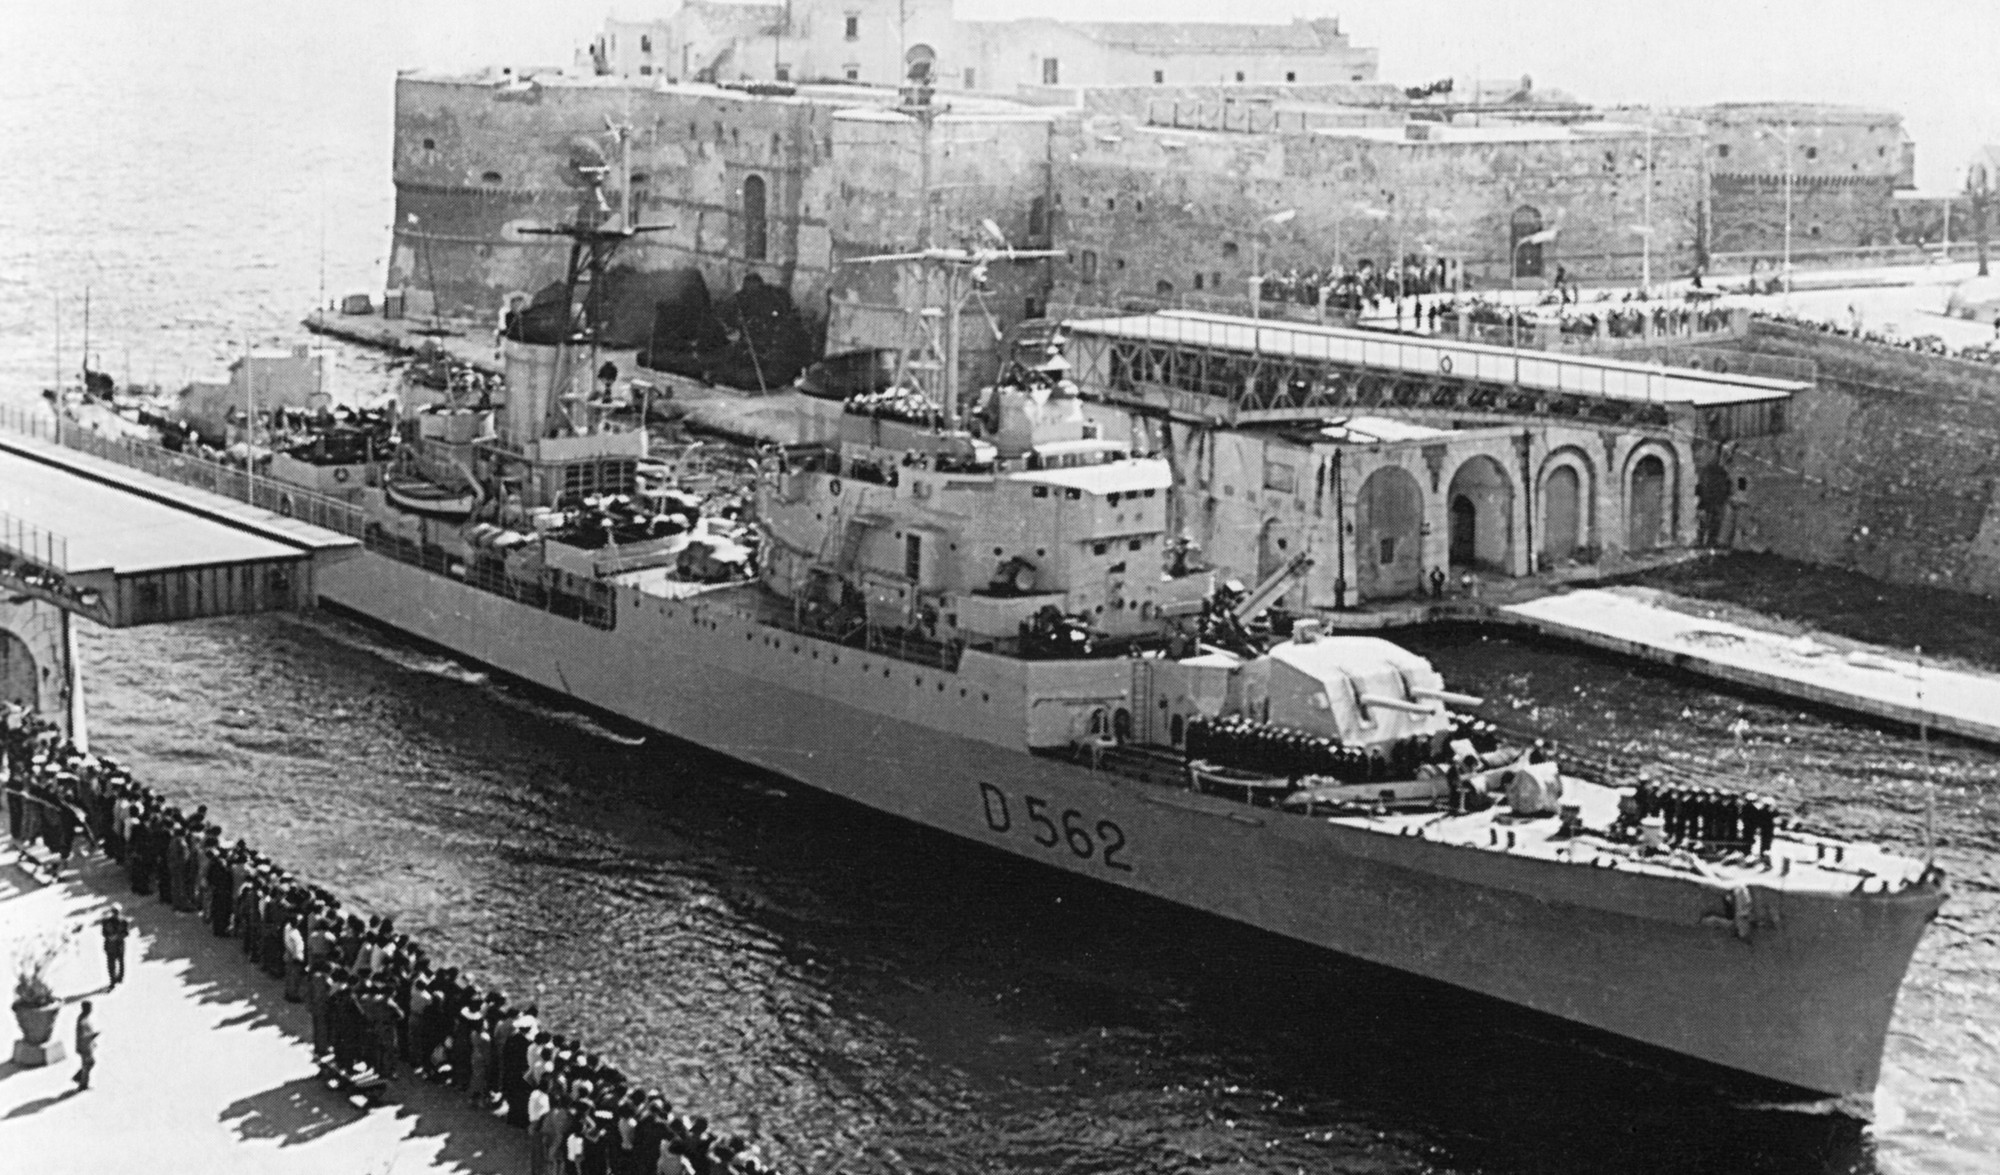 d-562 san giorgio destroyer nave its italian navy marina militare mmi 09